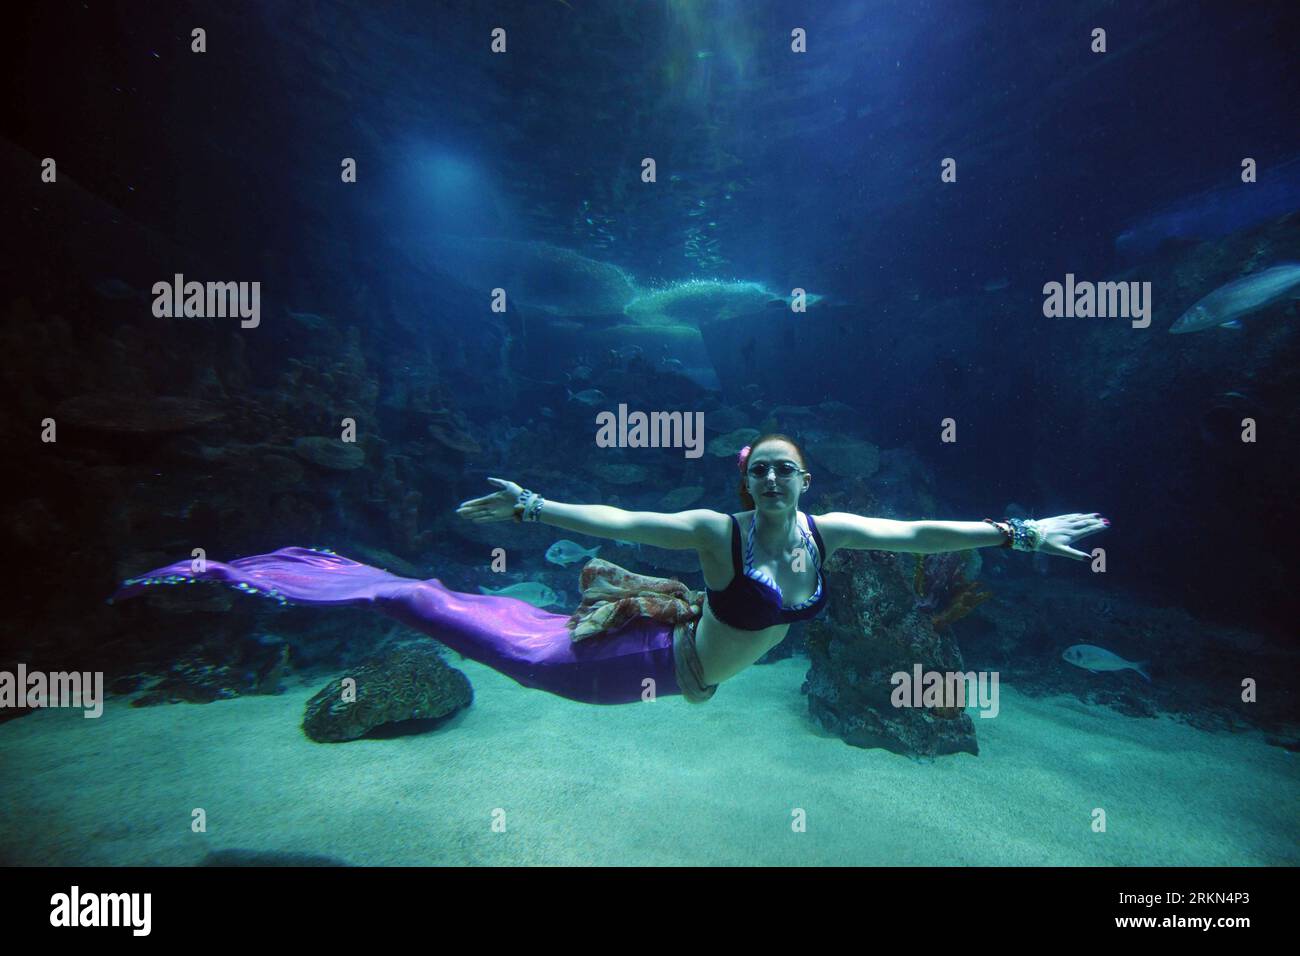 Bildnummer: 56975227  Datum: 27.01.2012  Copyright: imago/Xinhua (120127) -- ISTANBUL, Jan. 27, 2012 (Xinhua) -- A member of British Aquabatix group performs inside an aquarium during the Love story of the mermaid underwater theater show at Turkuazoo Aquarium center in Istanbul, Turkey, Jan. 27, 2012. The show will be presented till Jan. 29. (Xinhua/Ma Yan) TURKEY-ISTANBUL-UNDER WATER-PERFORMENCE PUBLICATIONxNOTxINxCHN Gesellschaft Entertainment Unterwasser Meerjungfrau Performance xda x0x 2012 quer      56975227 Date 27 01 2012 Copyright Imago XINHUA  Istanbul Jan 27 2012 XINHUA a member of B Stock Photo